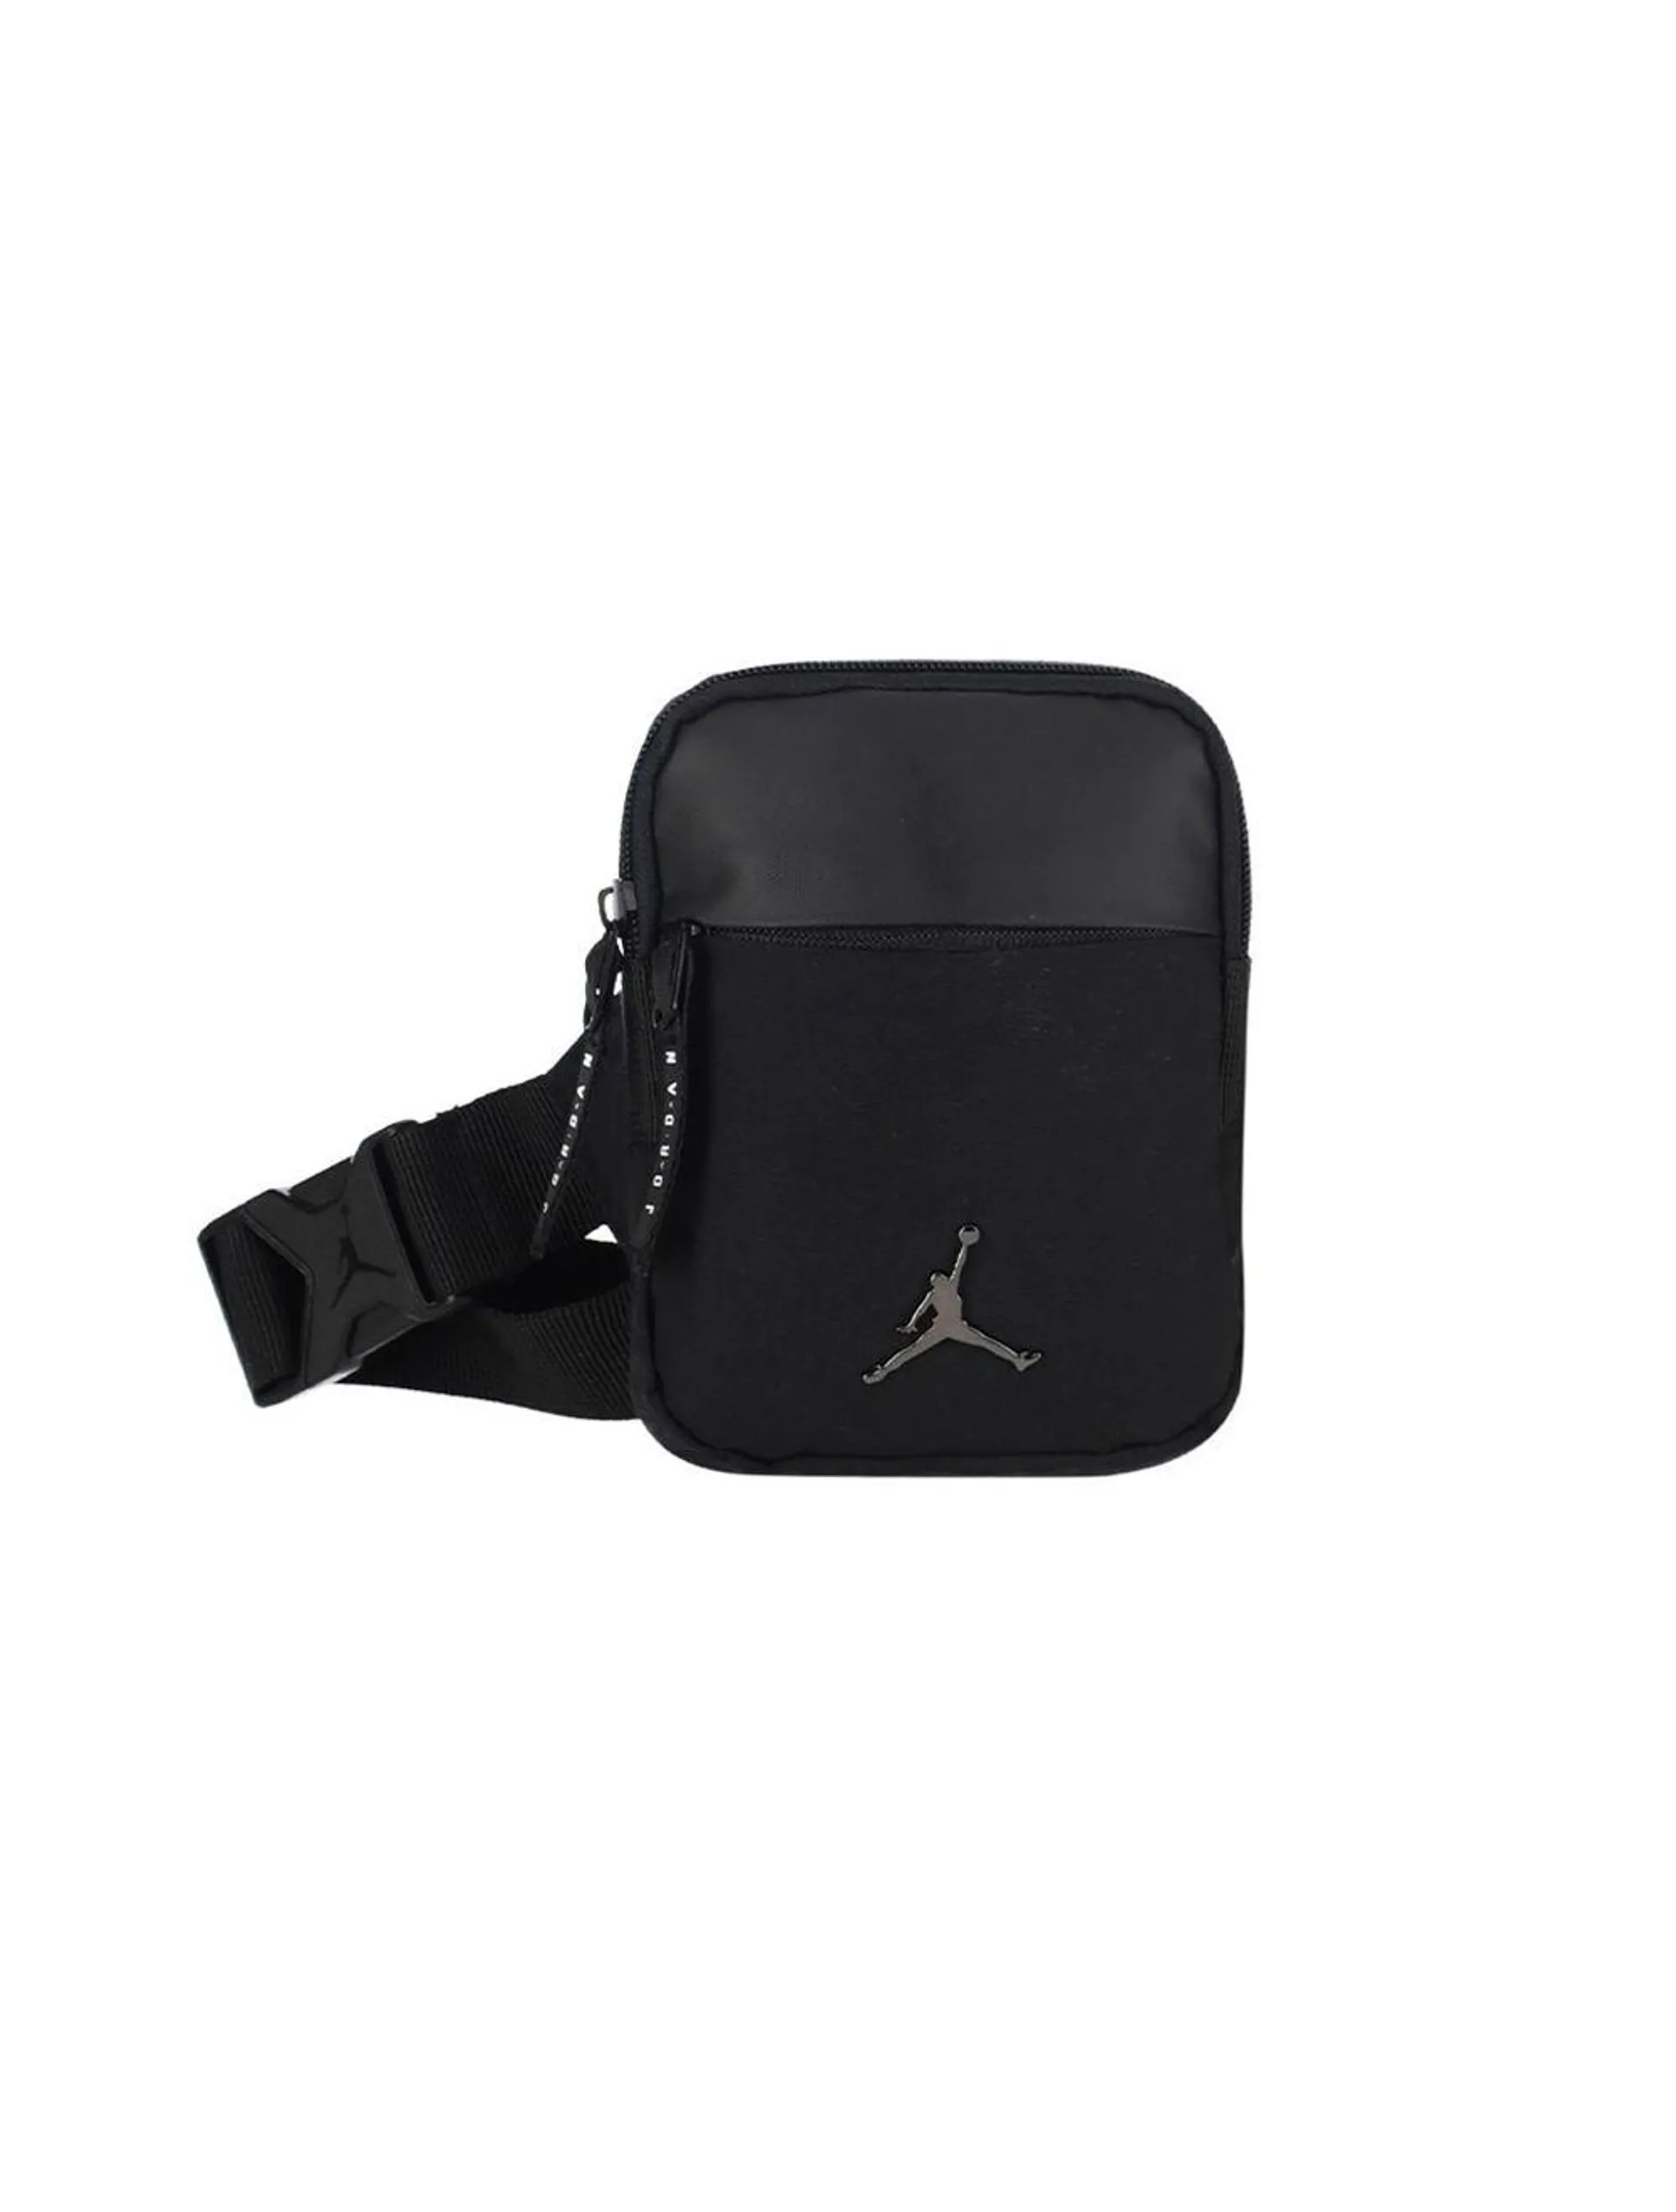 Air Jordan Airborne Hip Bag Black